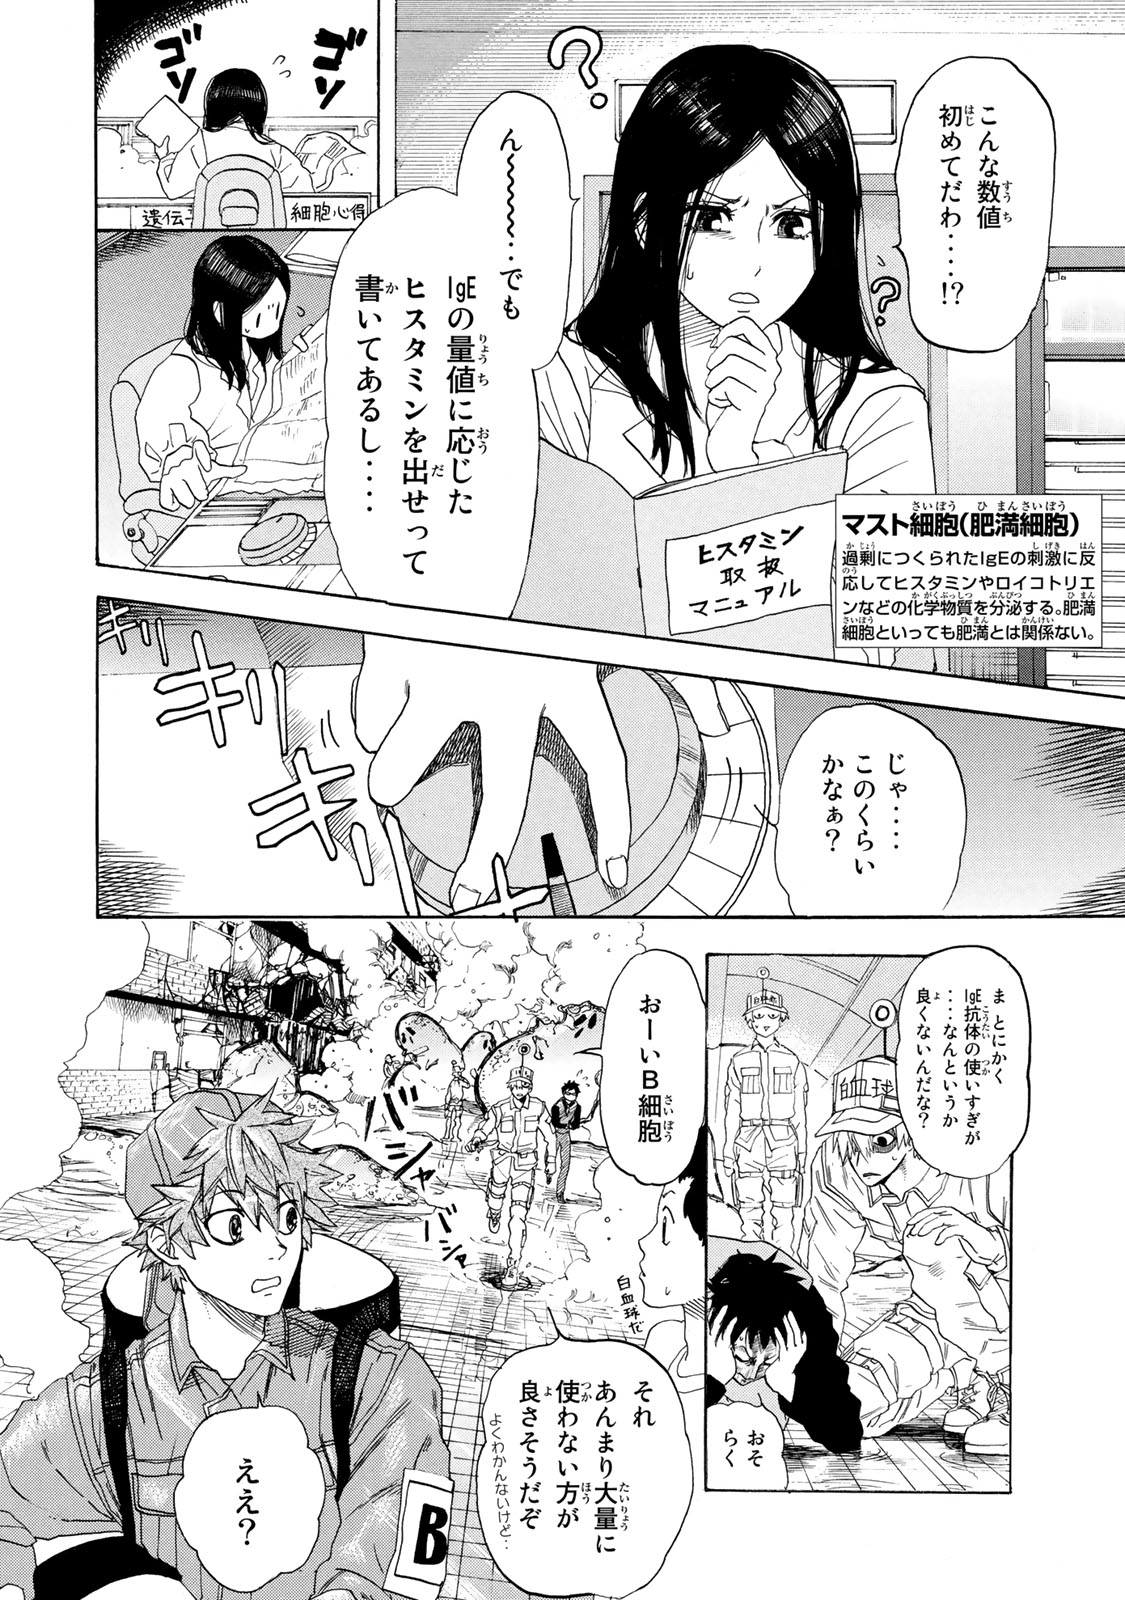 Hataraku Saibou - Chapter 2 - Page 18